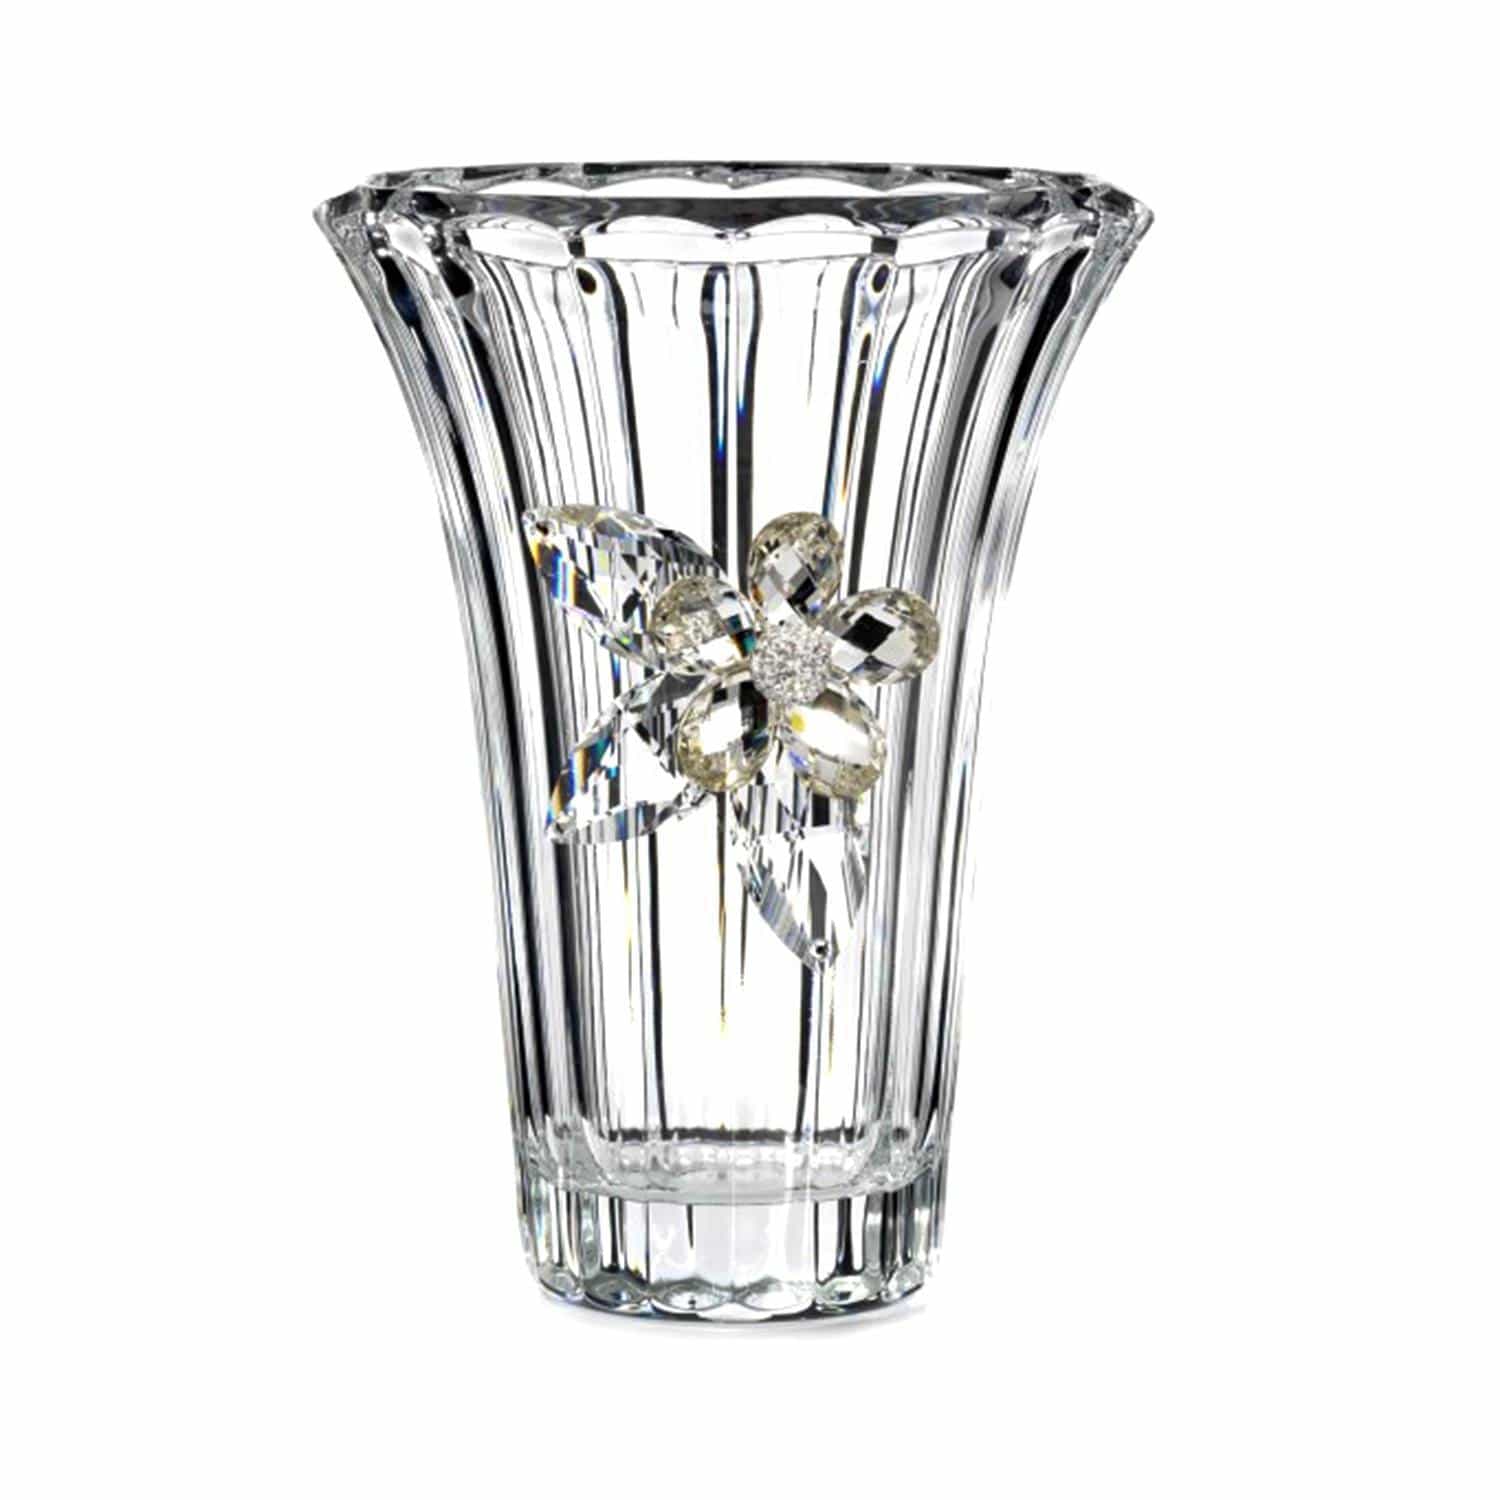 Debora Carlucci Crystal Foiled Flower Glass Vase with Metal Base - DC5543 - Jashanmal Home